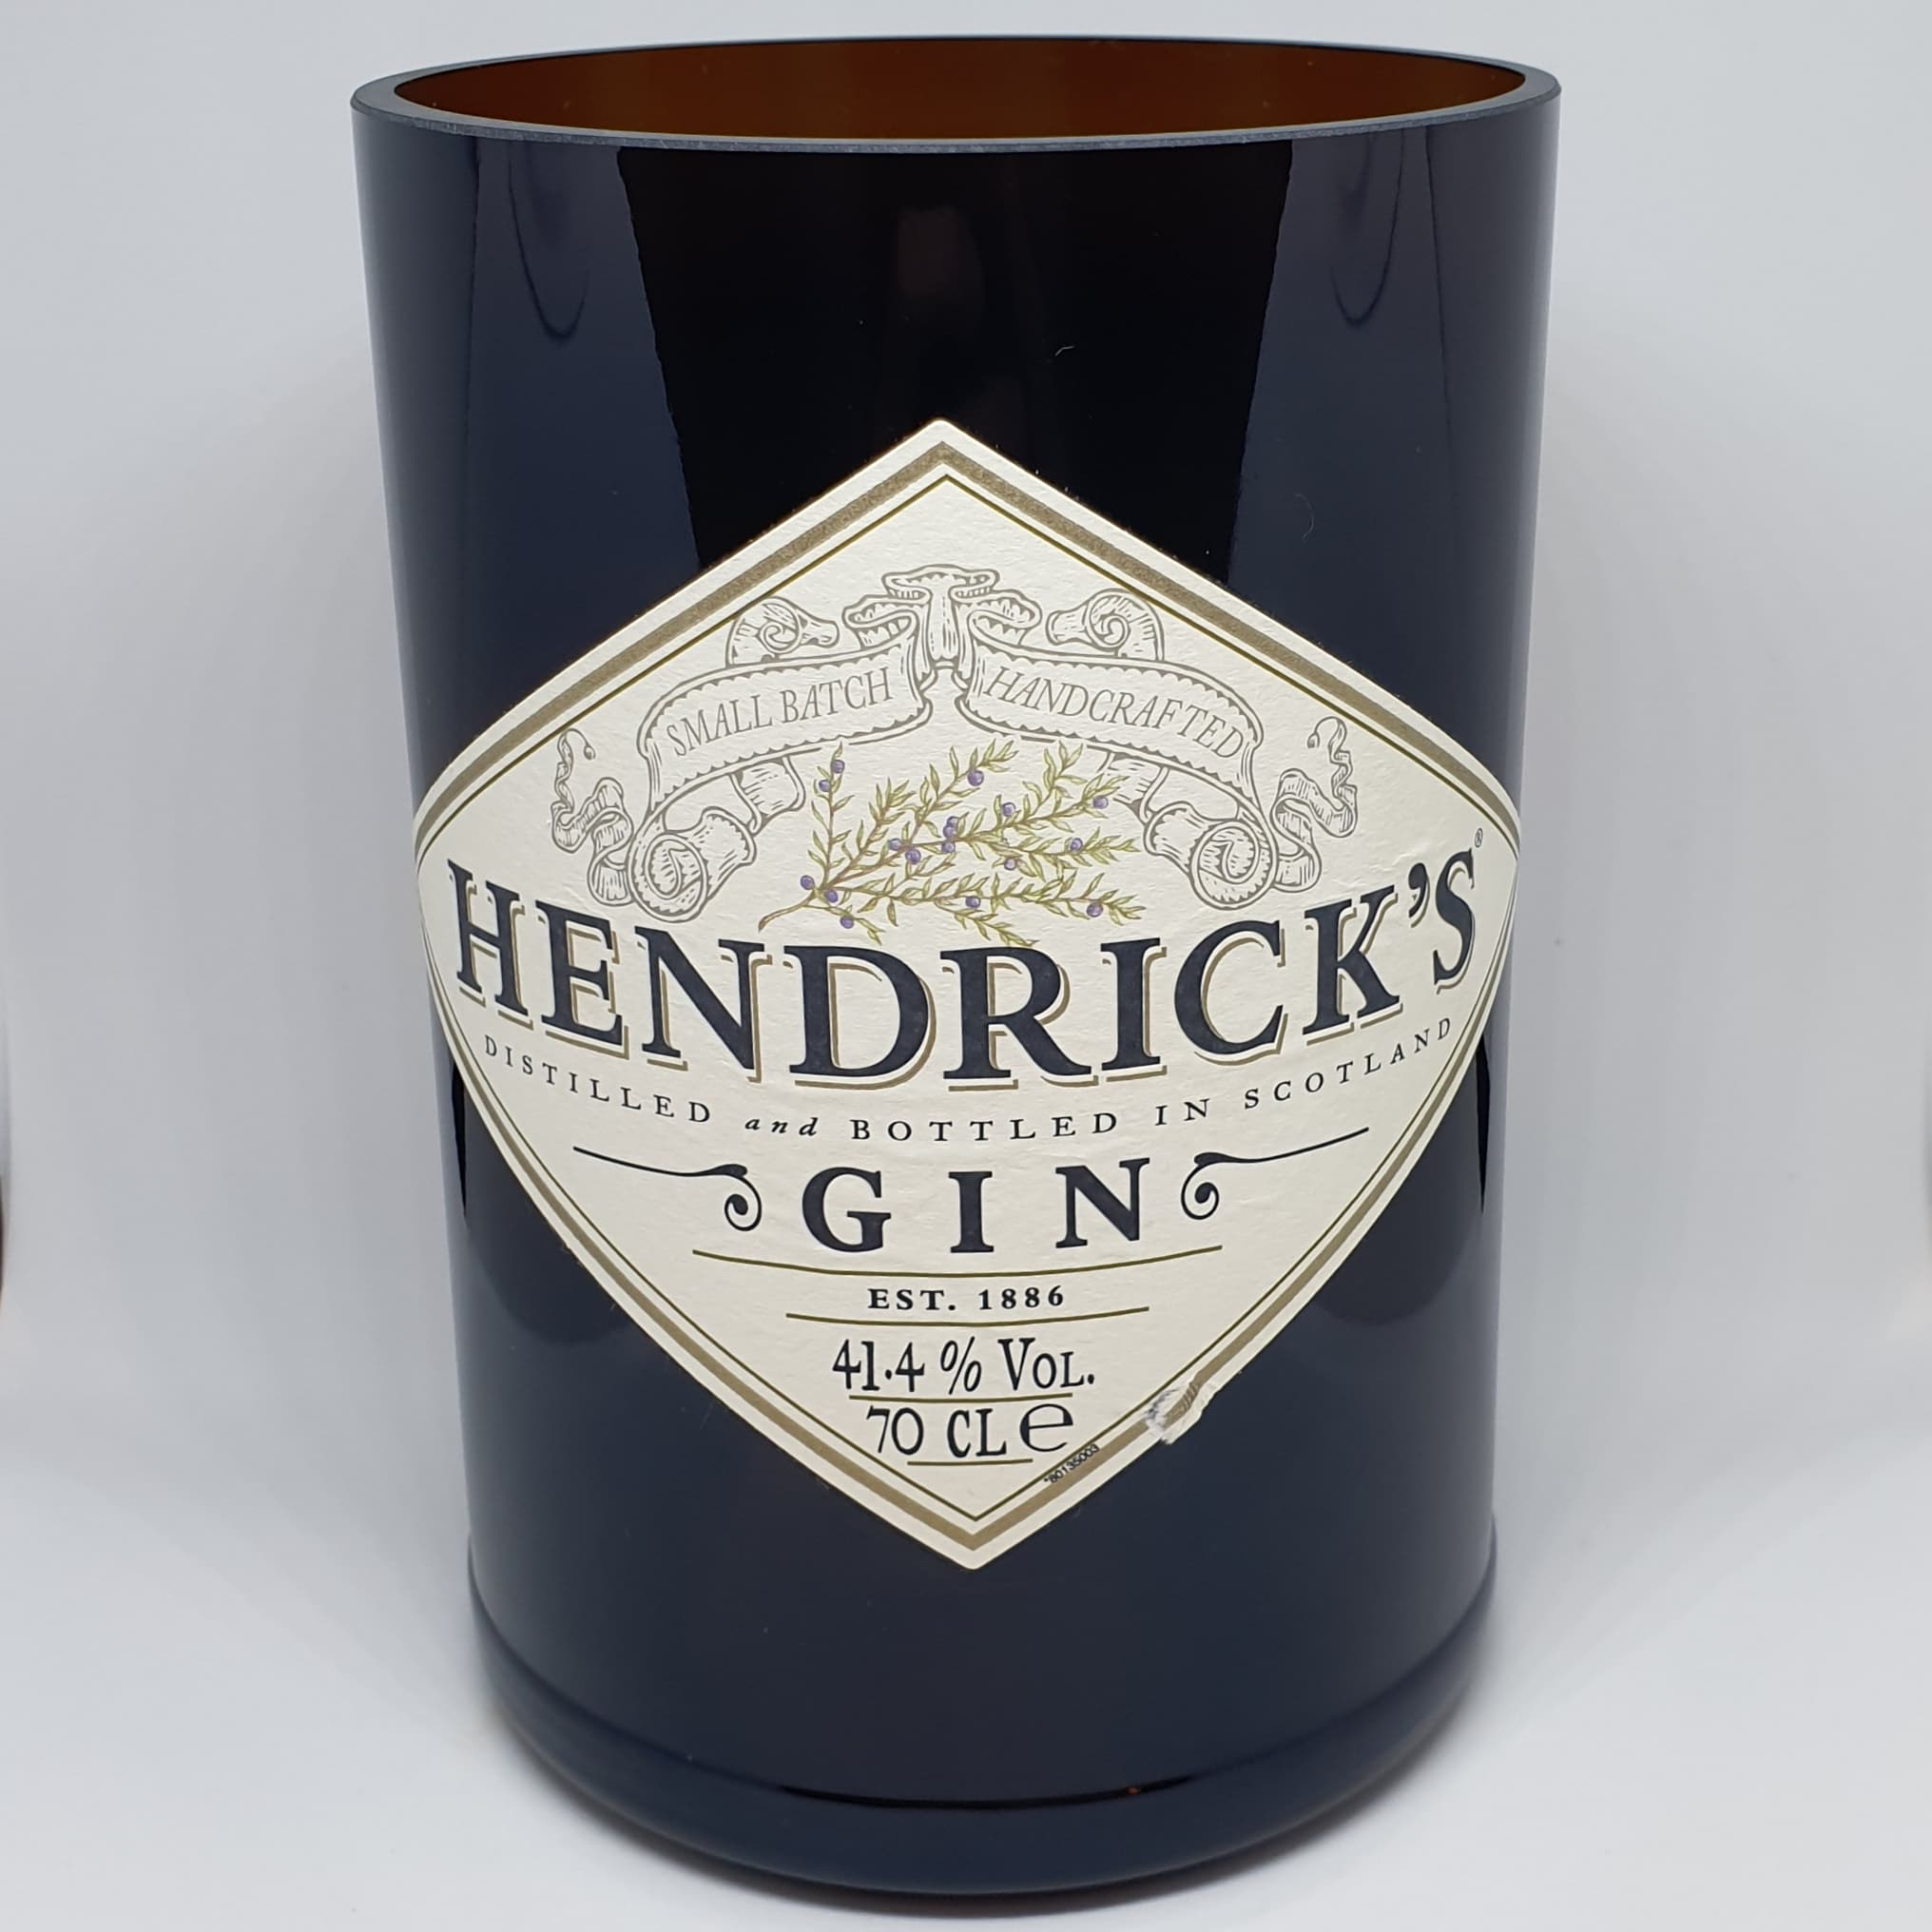 Hendricks Gin Bottle Candle